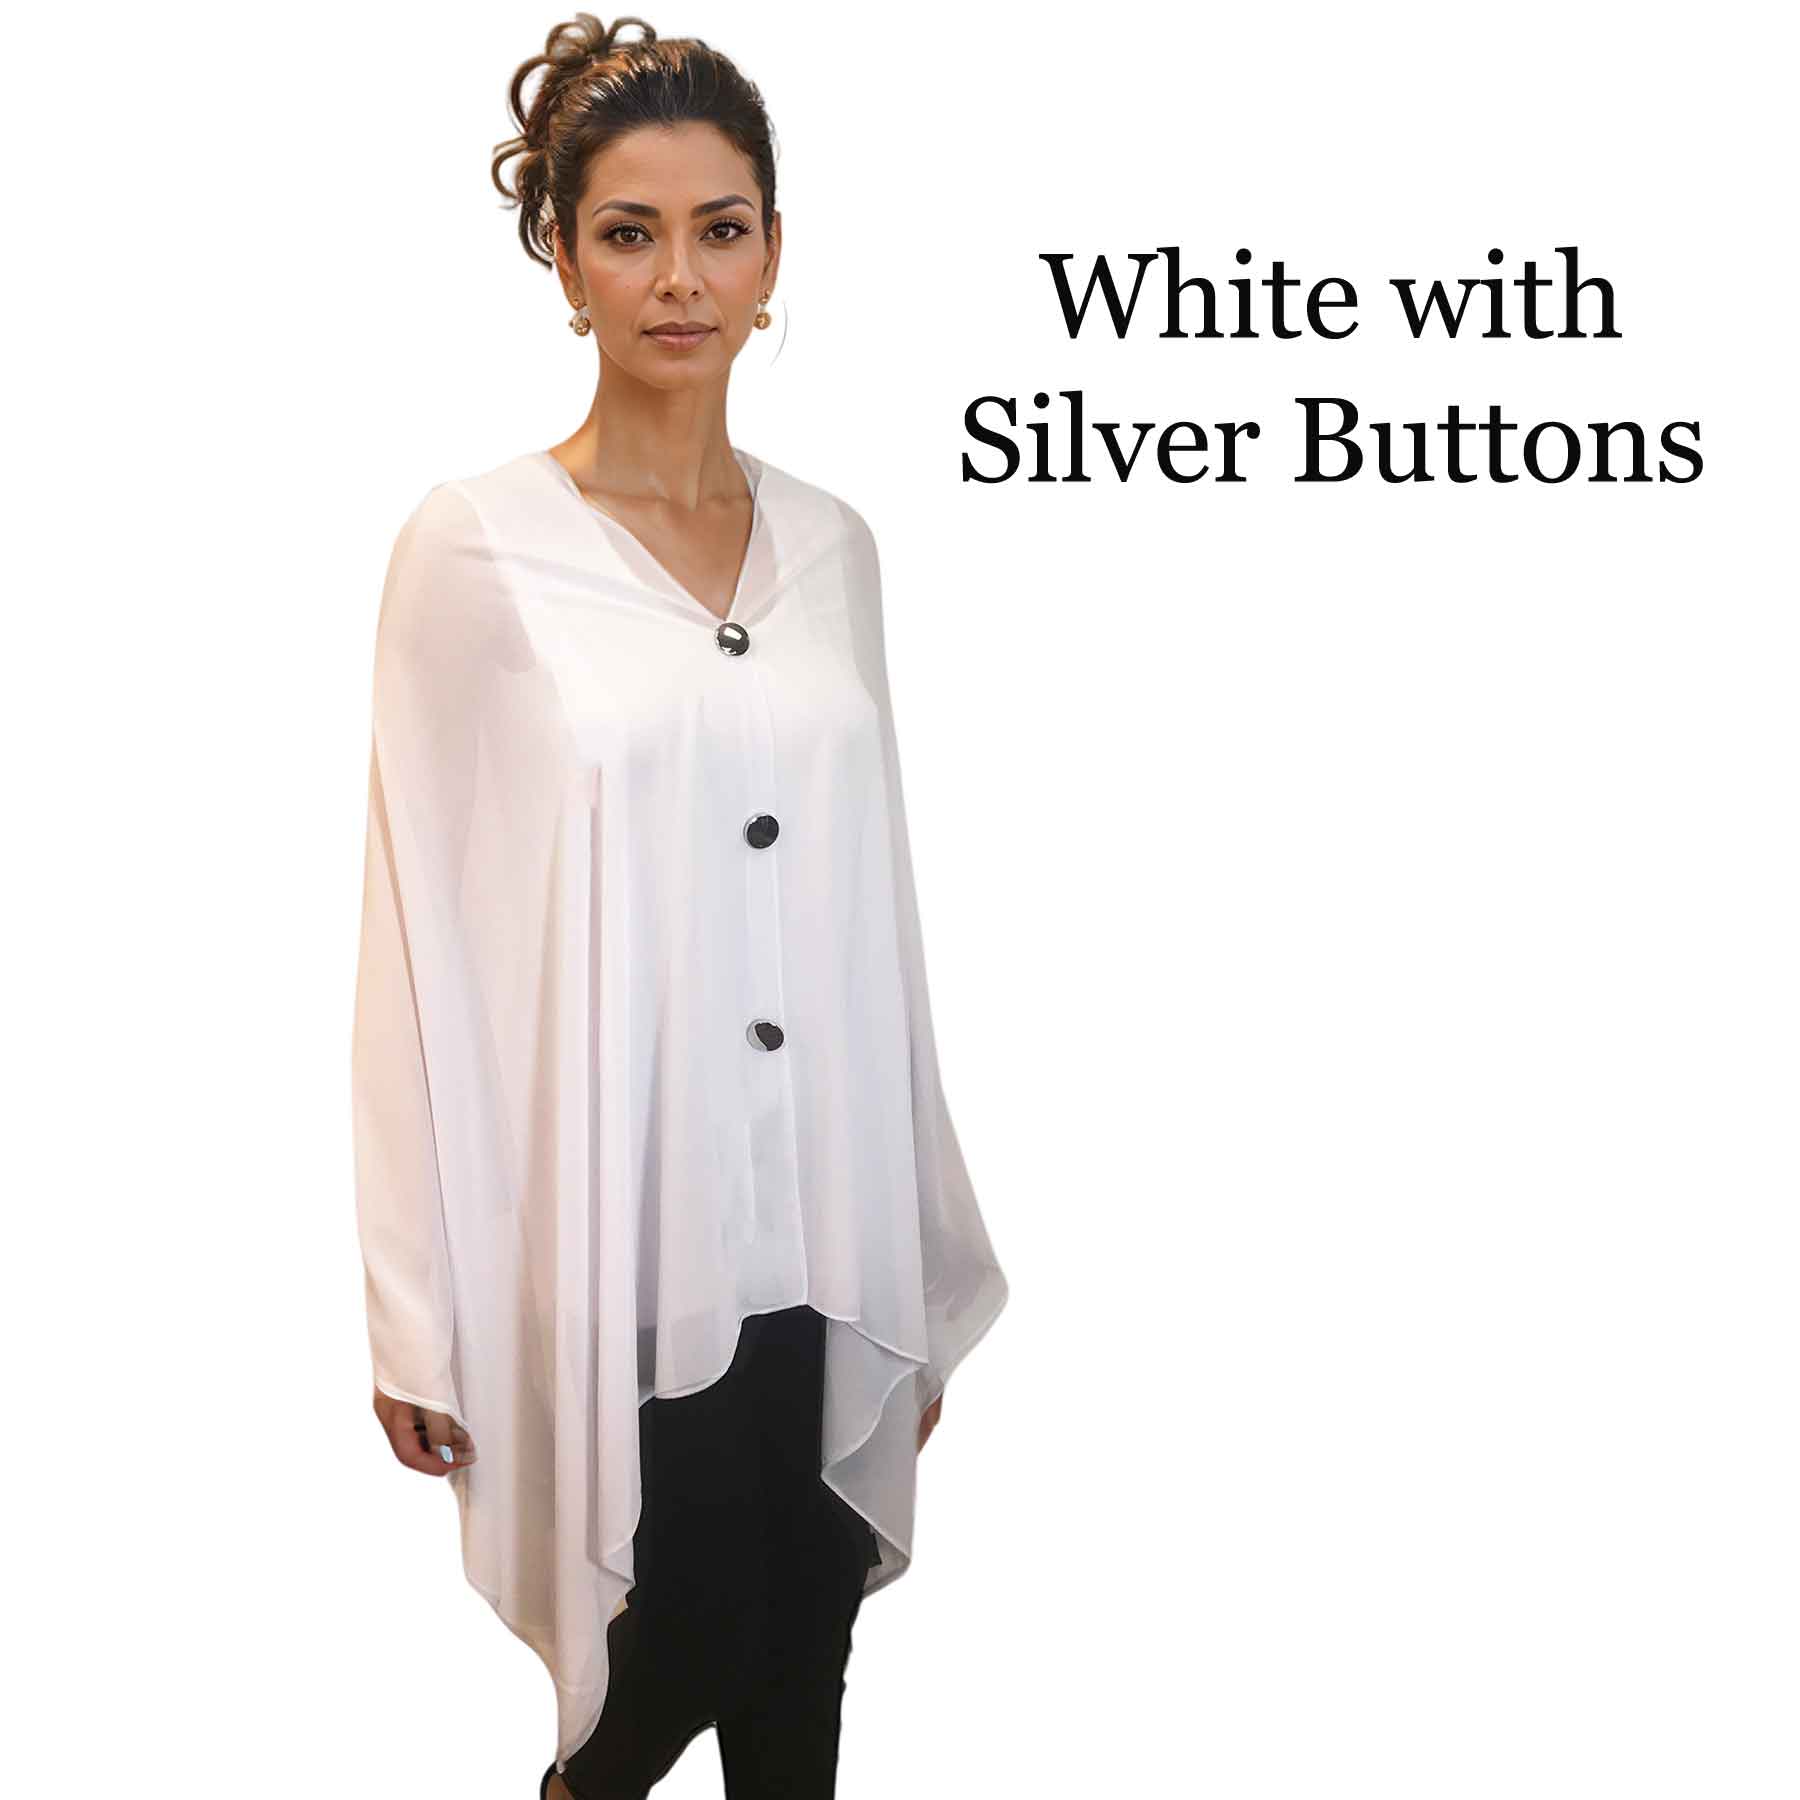 002S - White w/Silver Buttons<br>
Georgette Button Shawl

